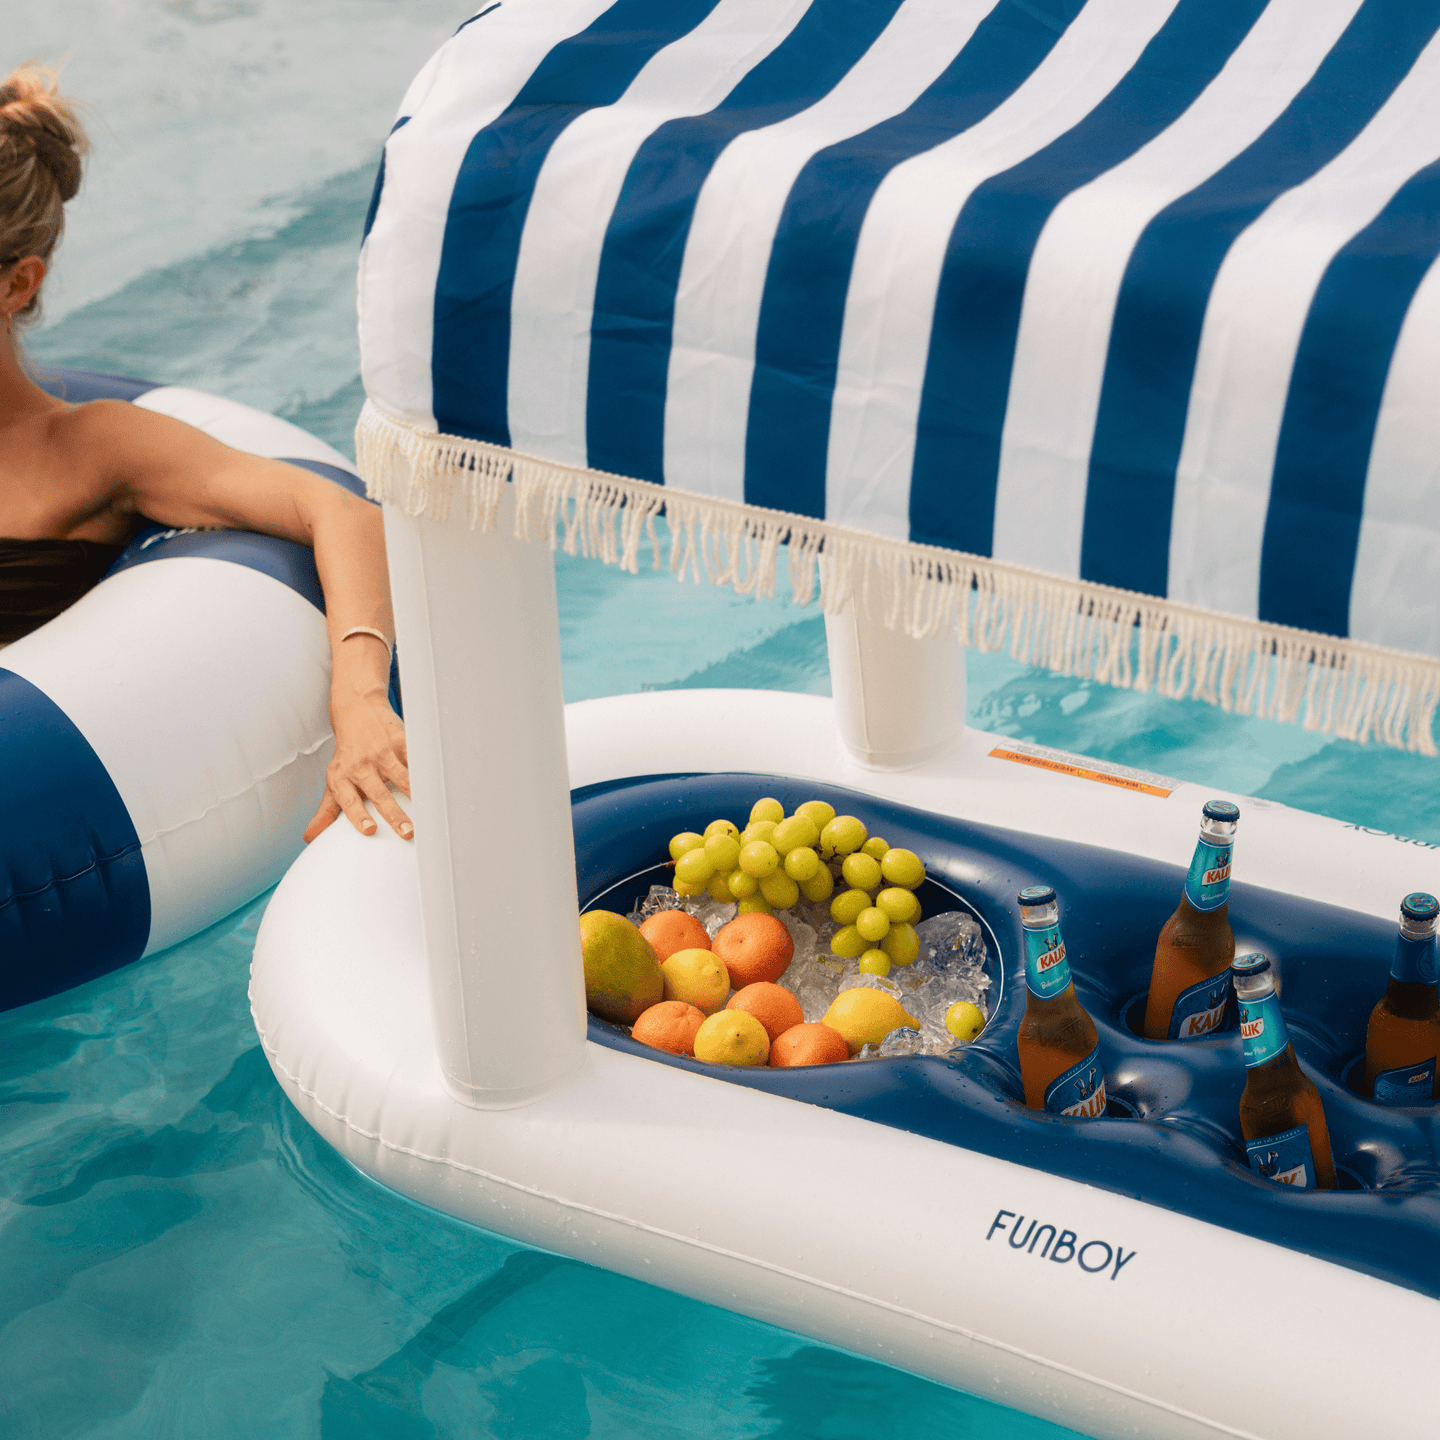 Inflatable Floating Cabana Bar - Navy & White Striped